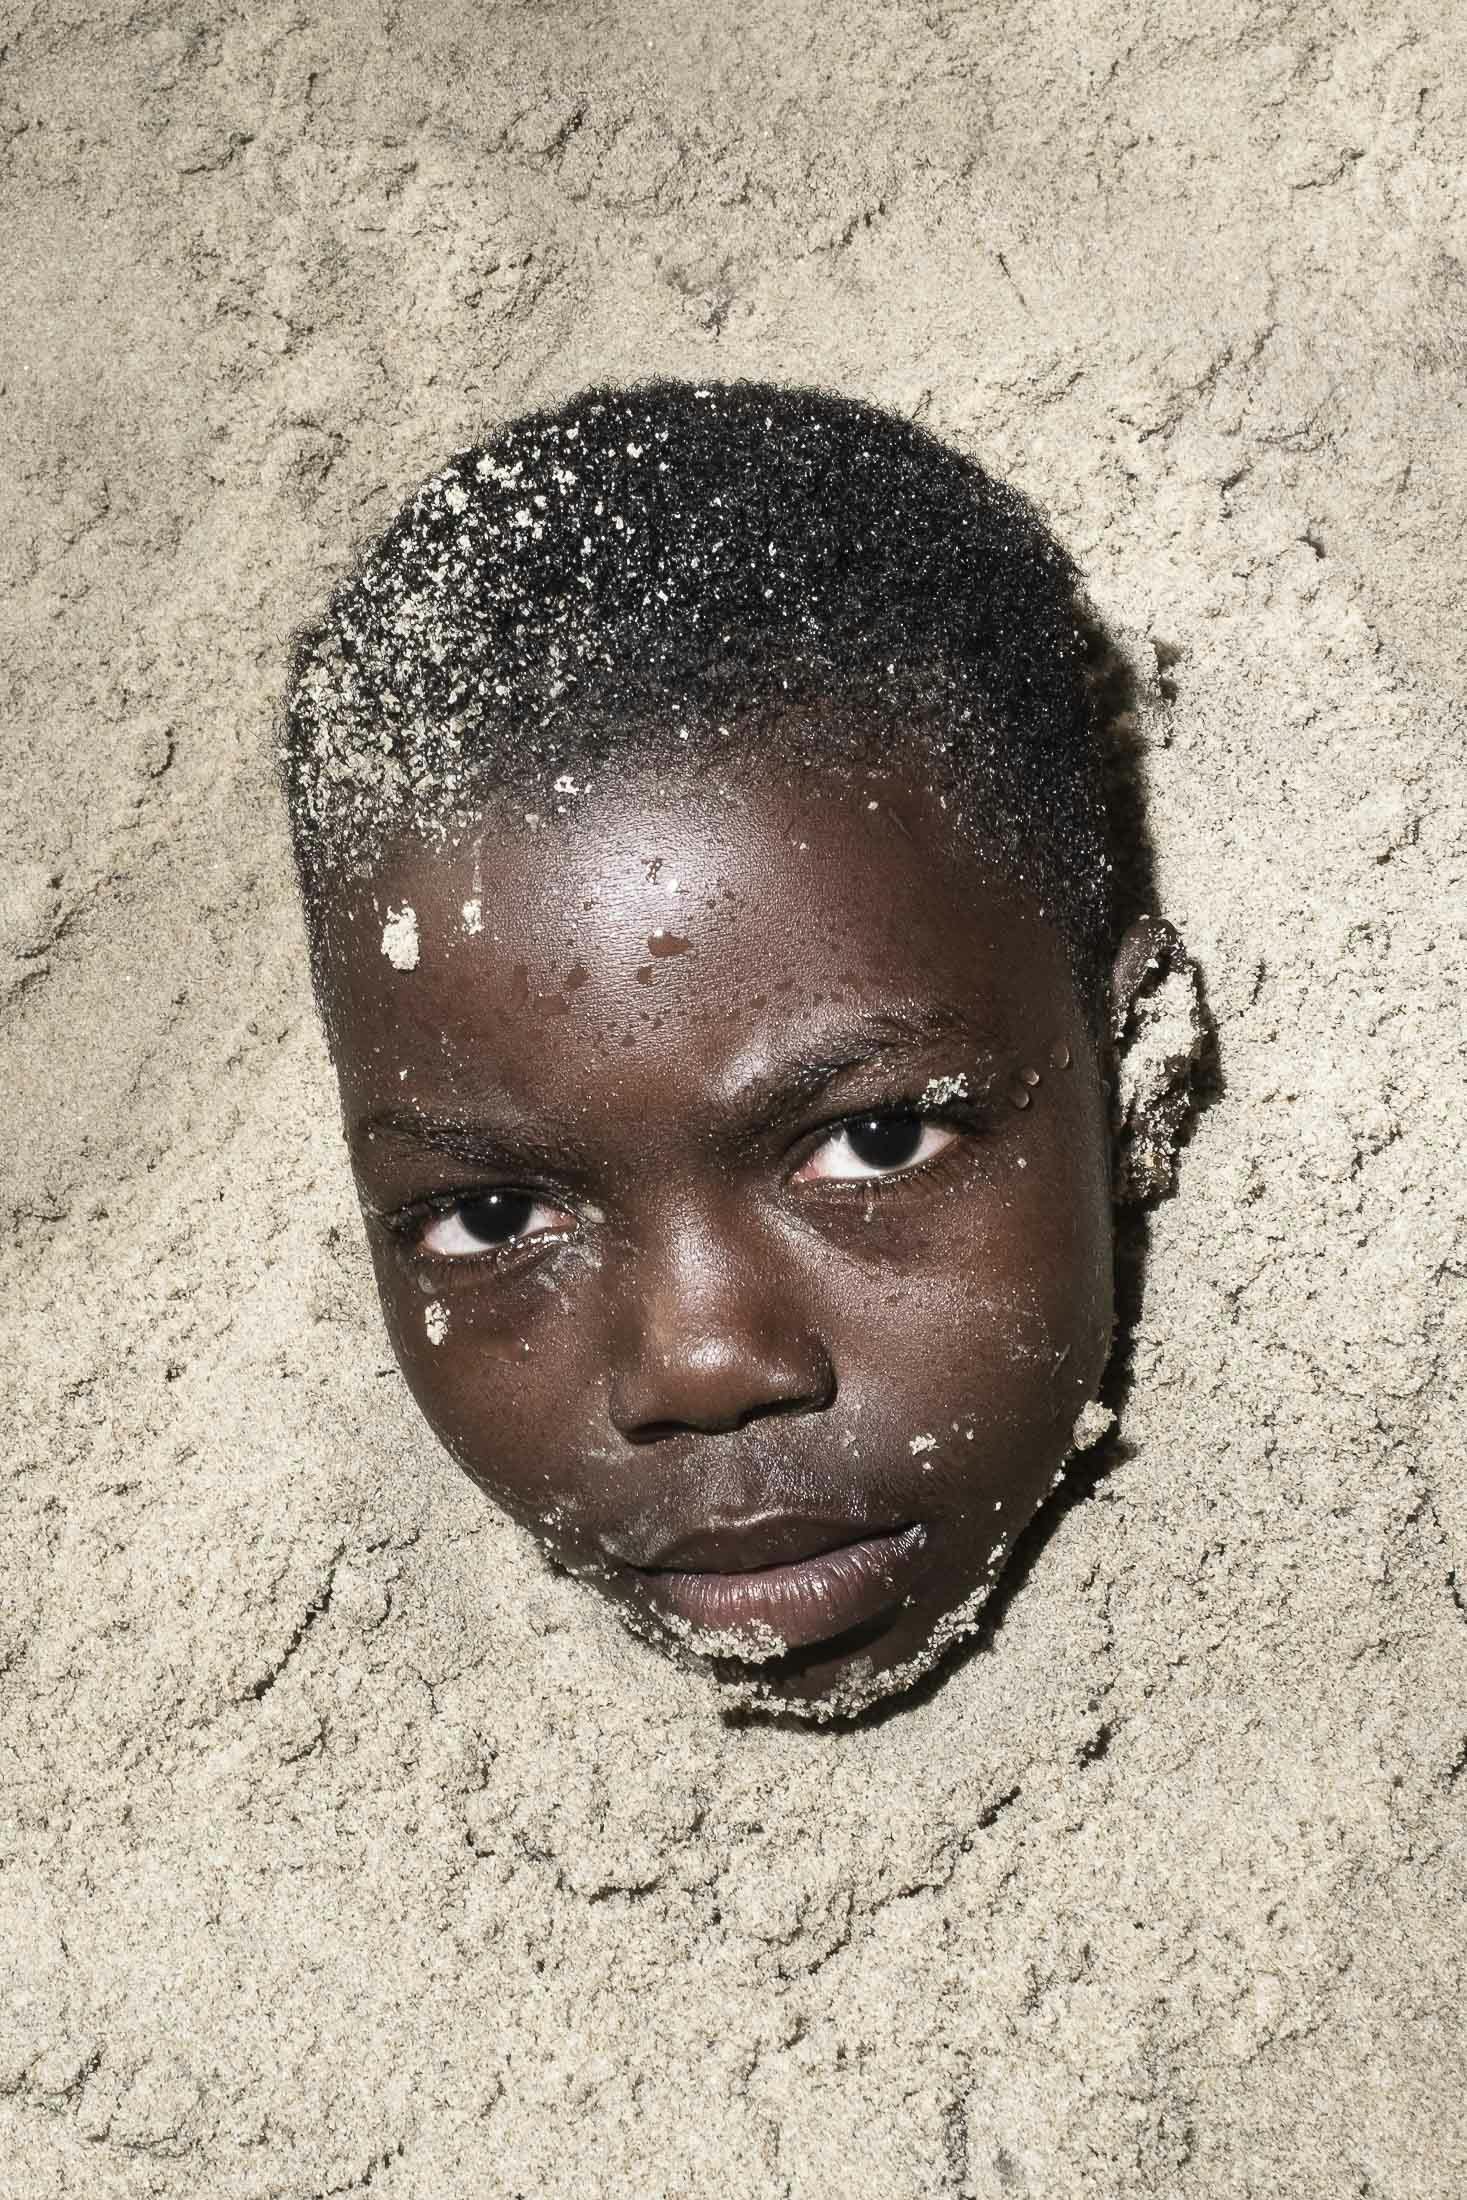 Boy buried in Sand in Accra, Ghana